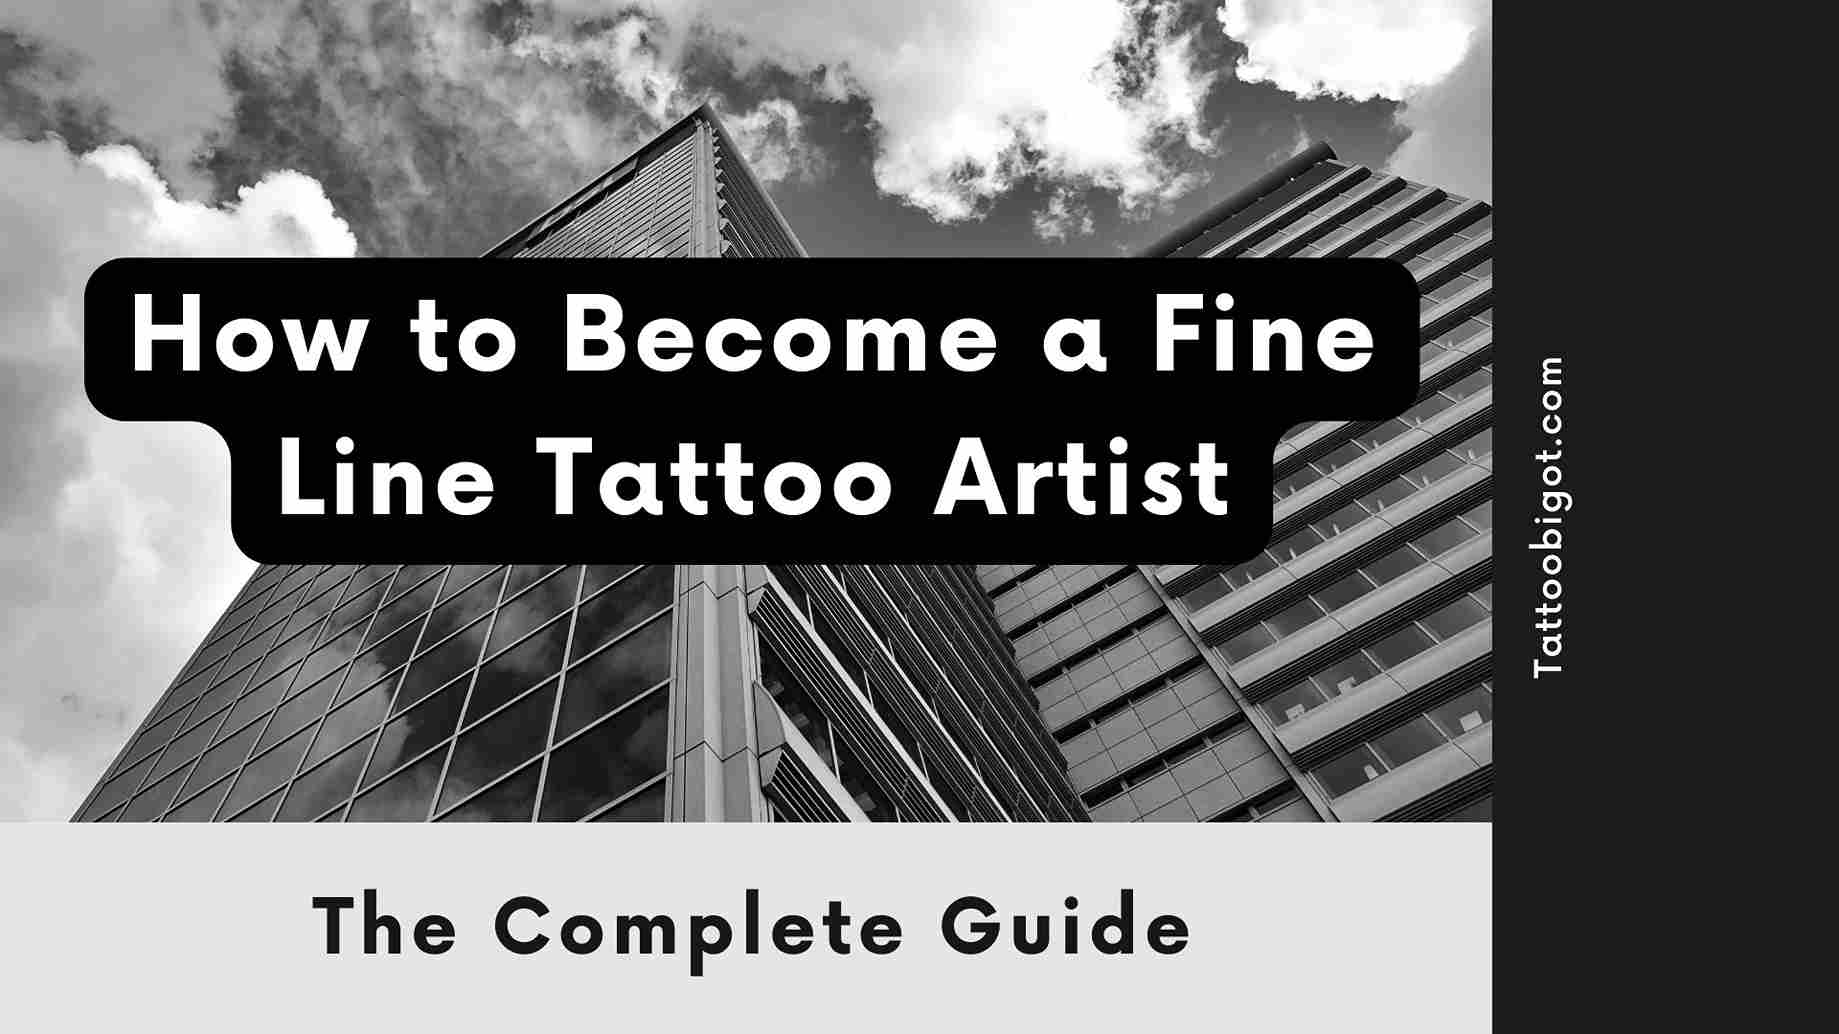 How to Become a Fine Line Tattoo Artist